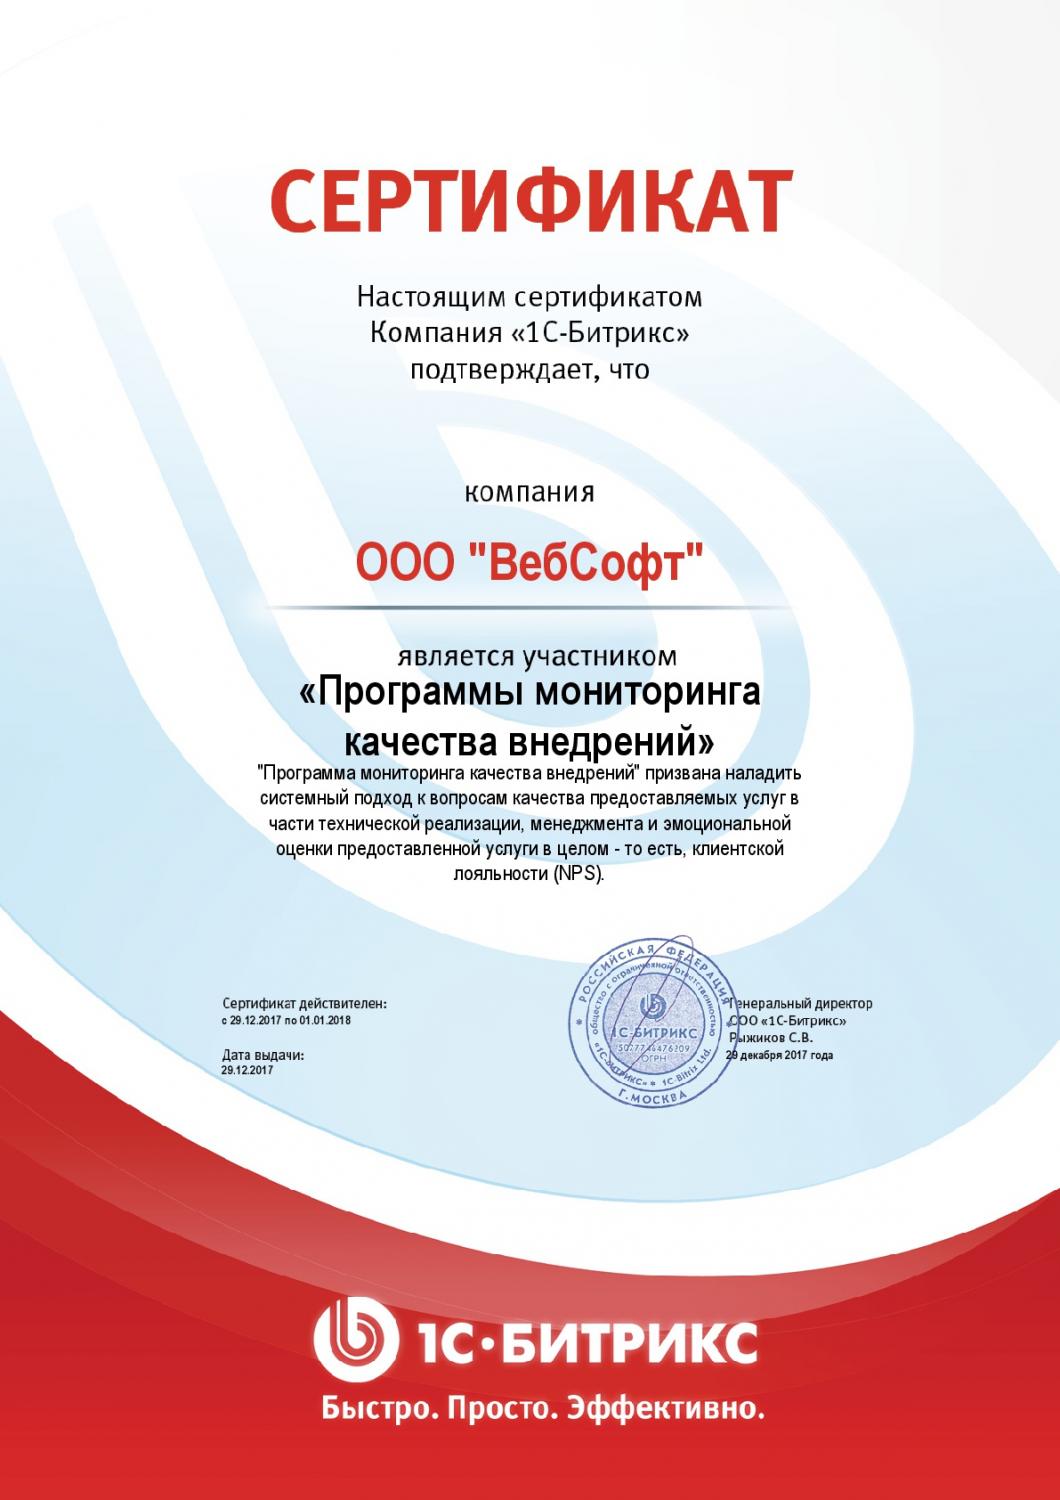 Сертификат мониторинга качества